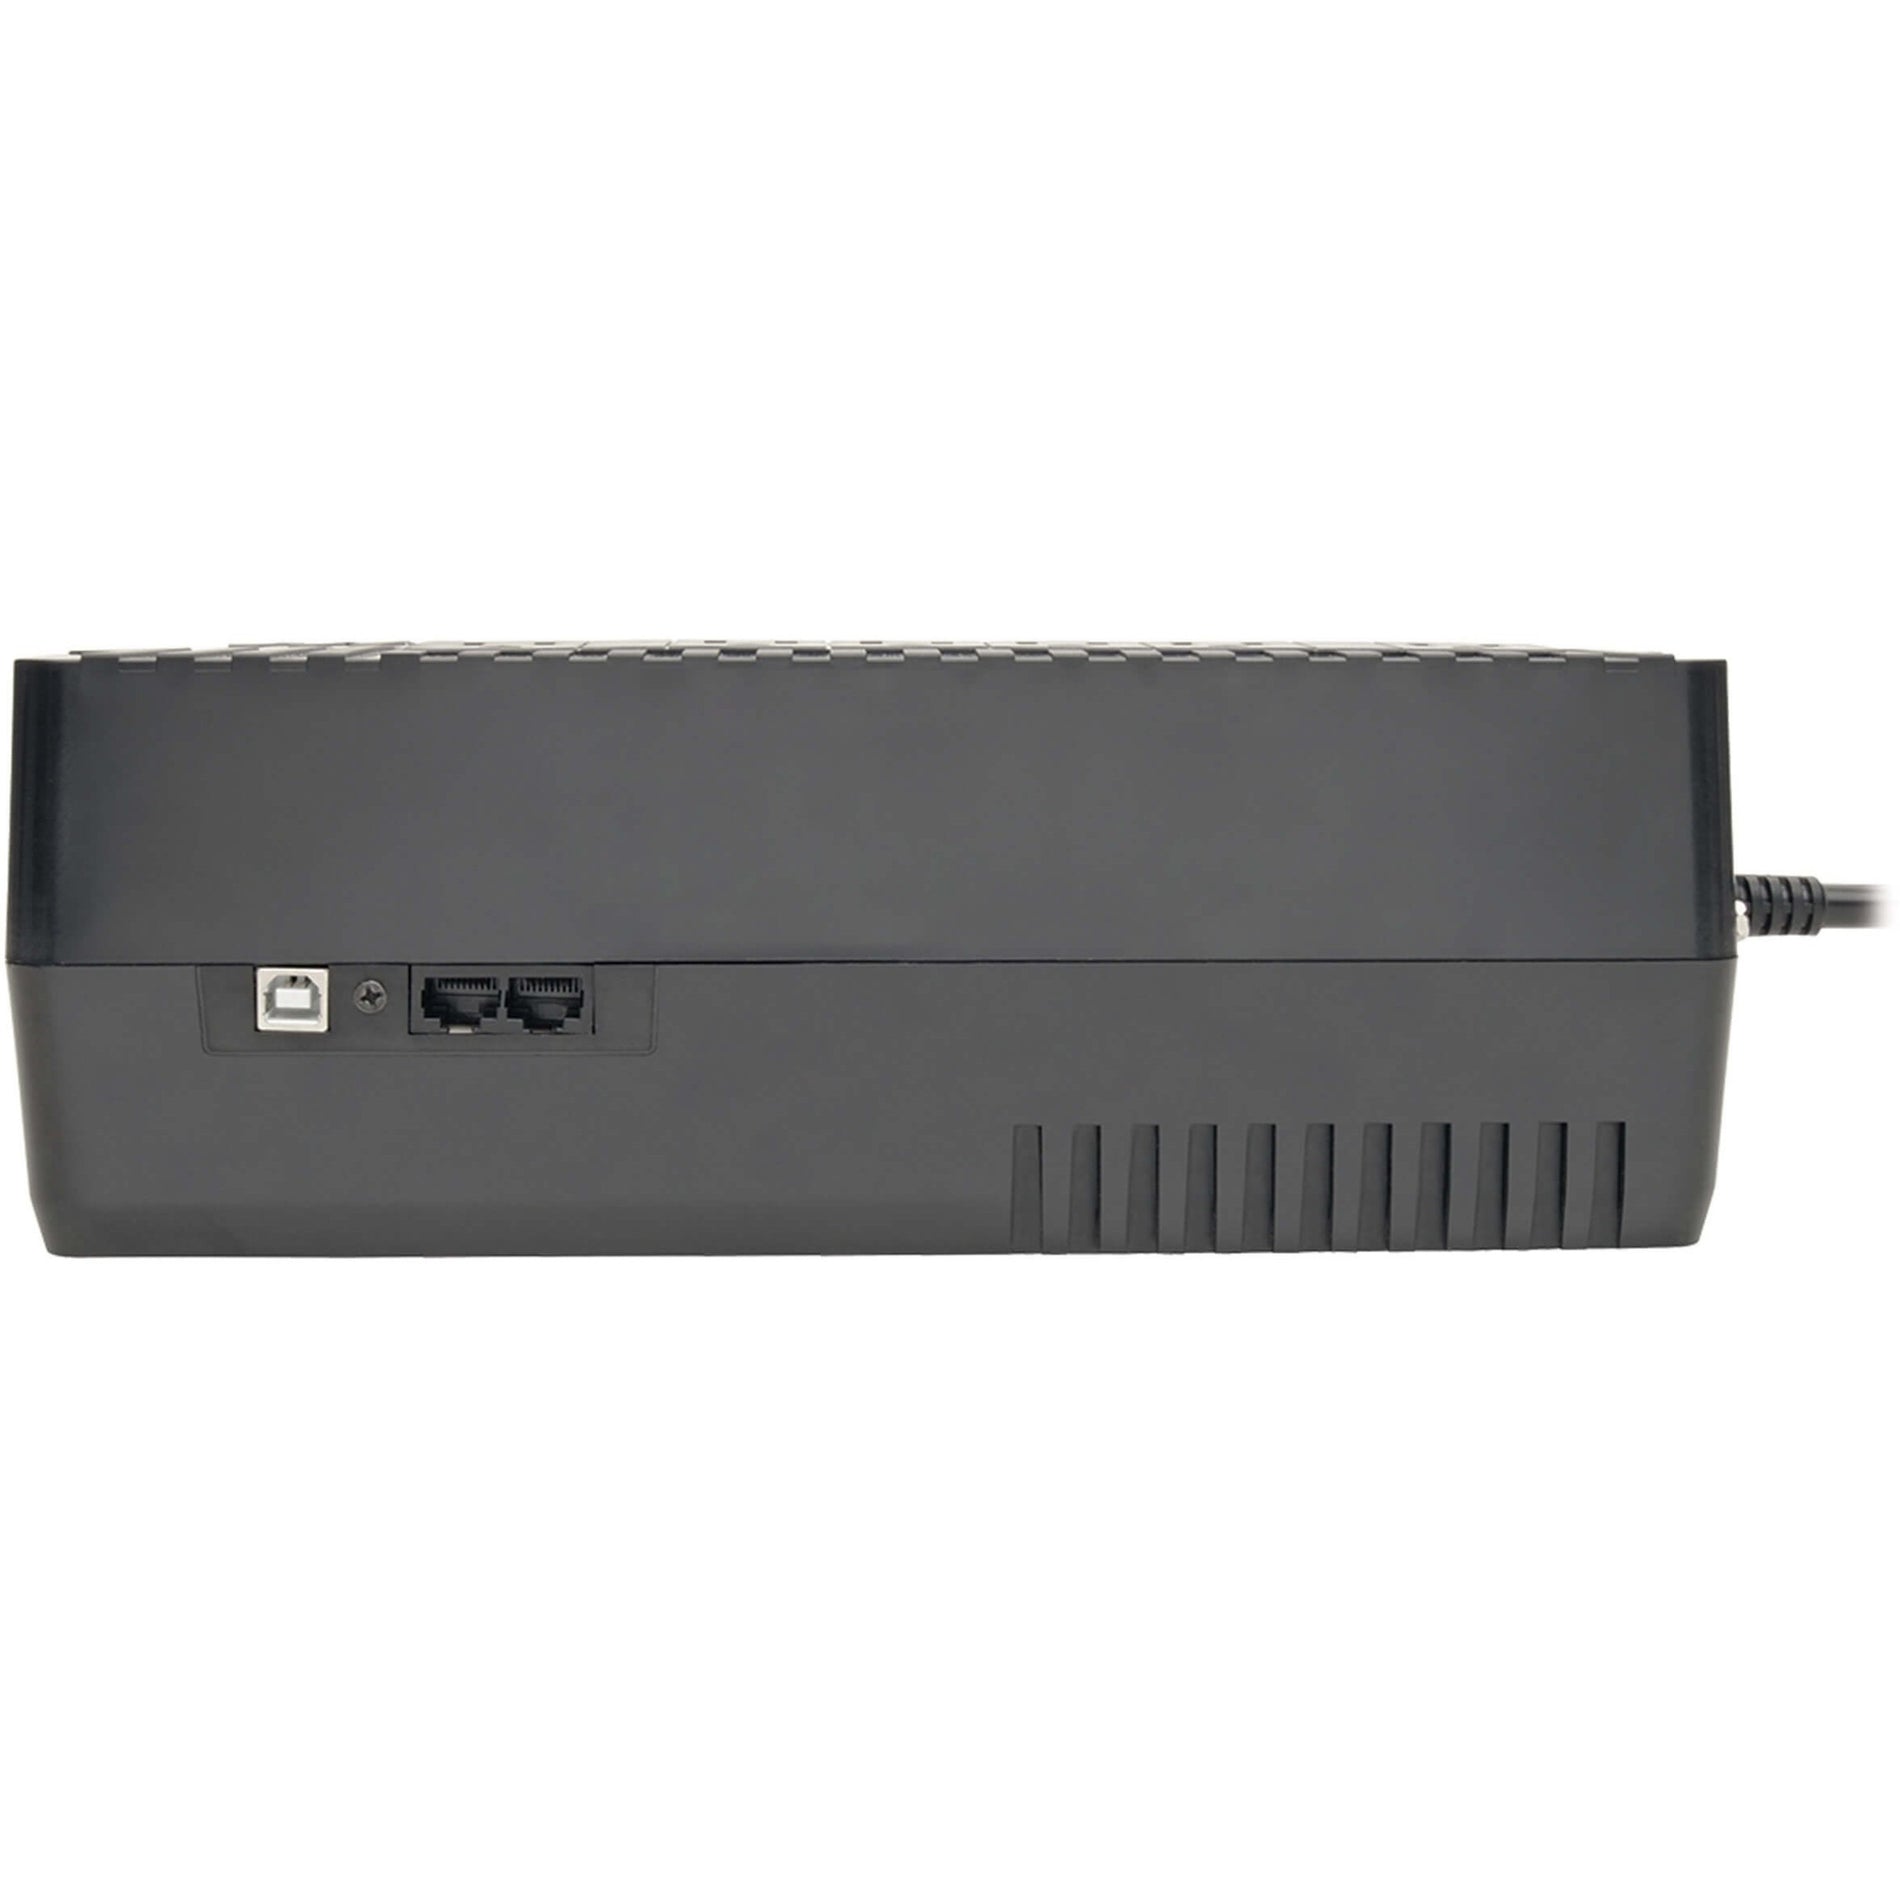 Tripp Lite UPS 750VA 450W Desktop Battery Back Up AVR 50/60Hz Compact 120V USB RJ11 (AVR750U) Left image